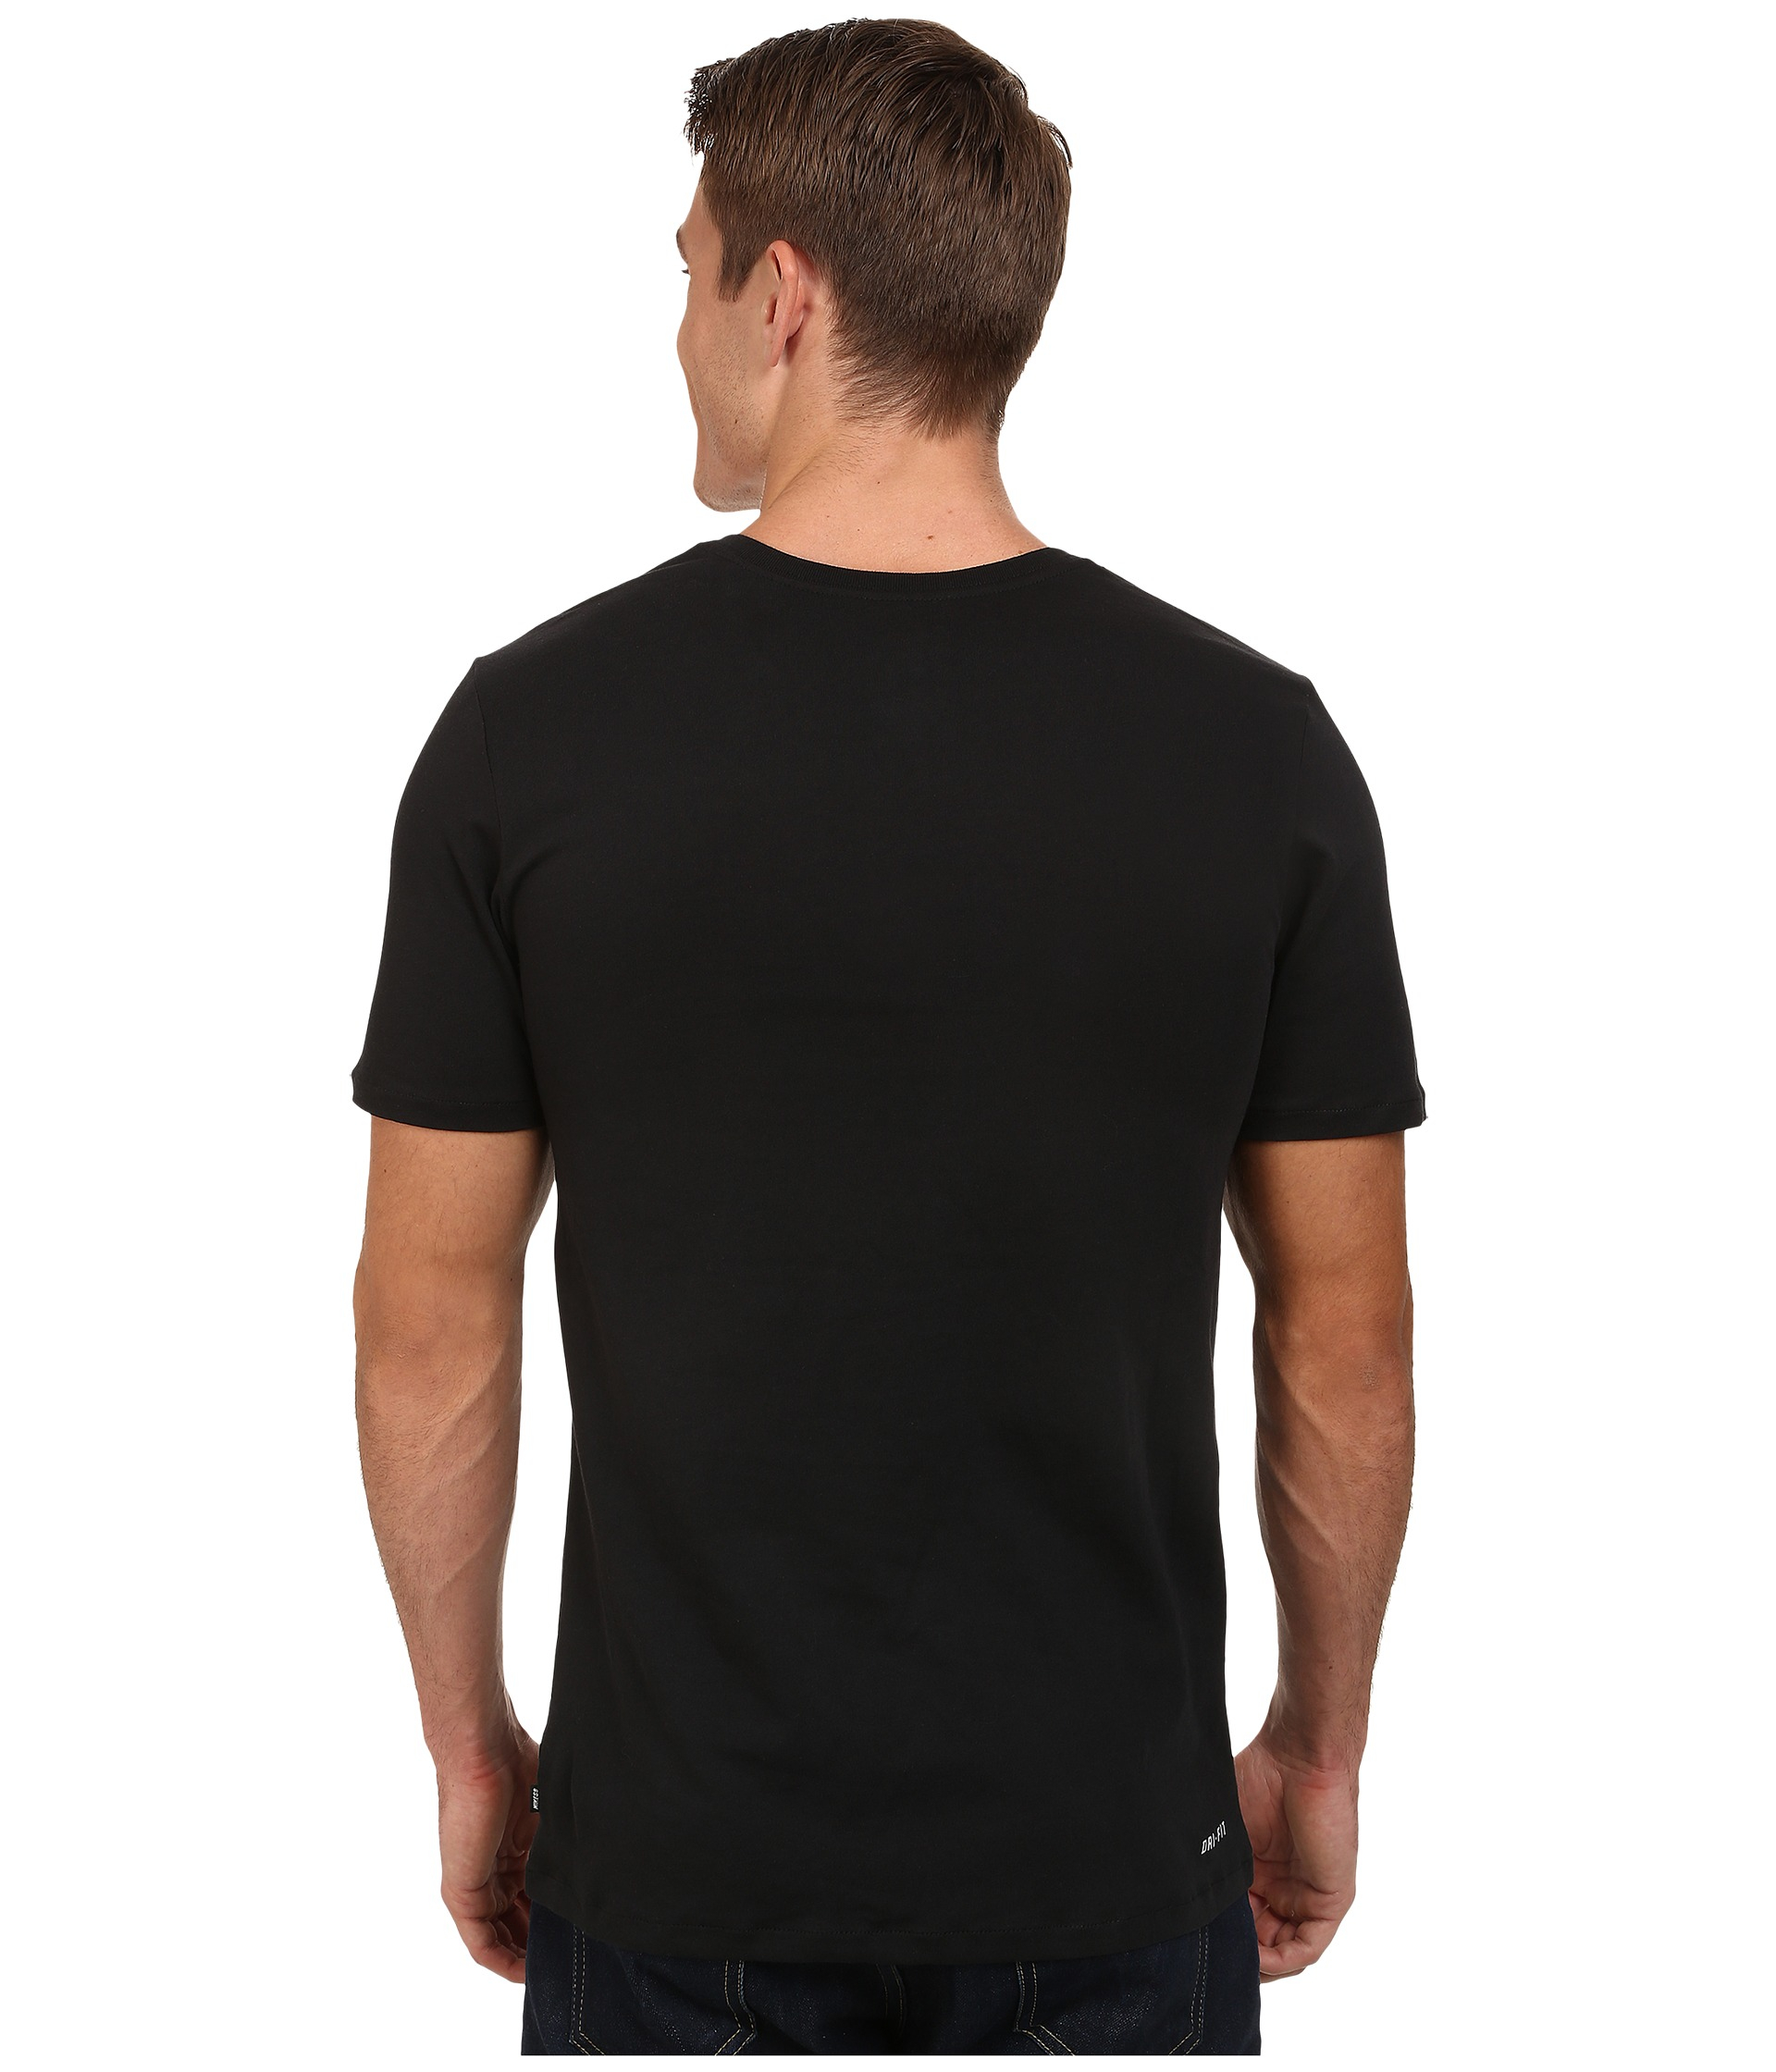 Nike Cotton Sb Dri-fit Solid V-neck Tee in Black/Black 1 (Black) for ...